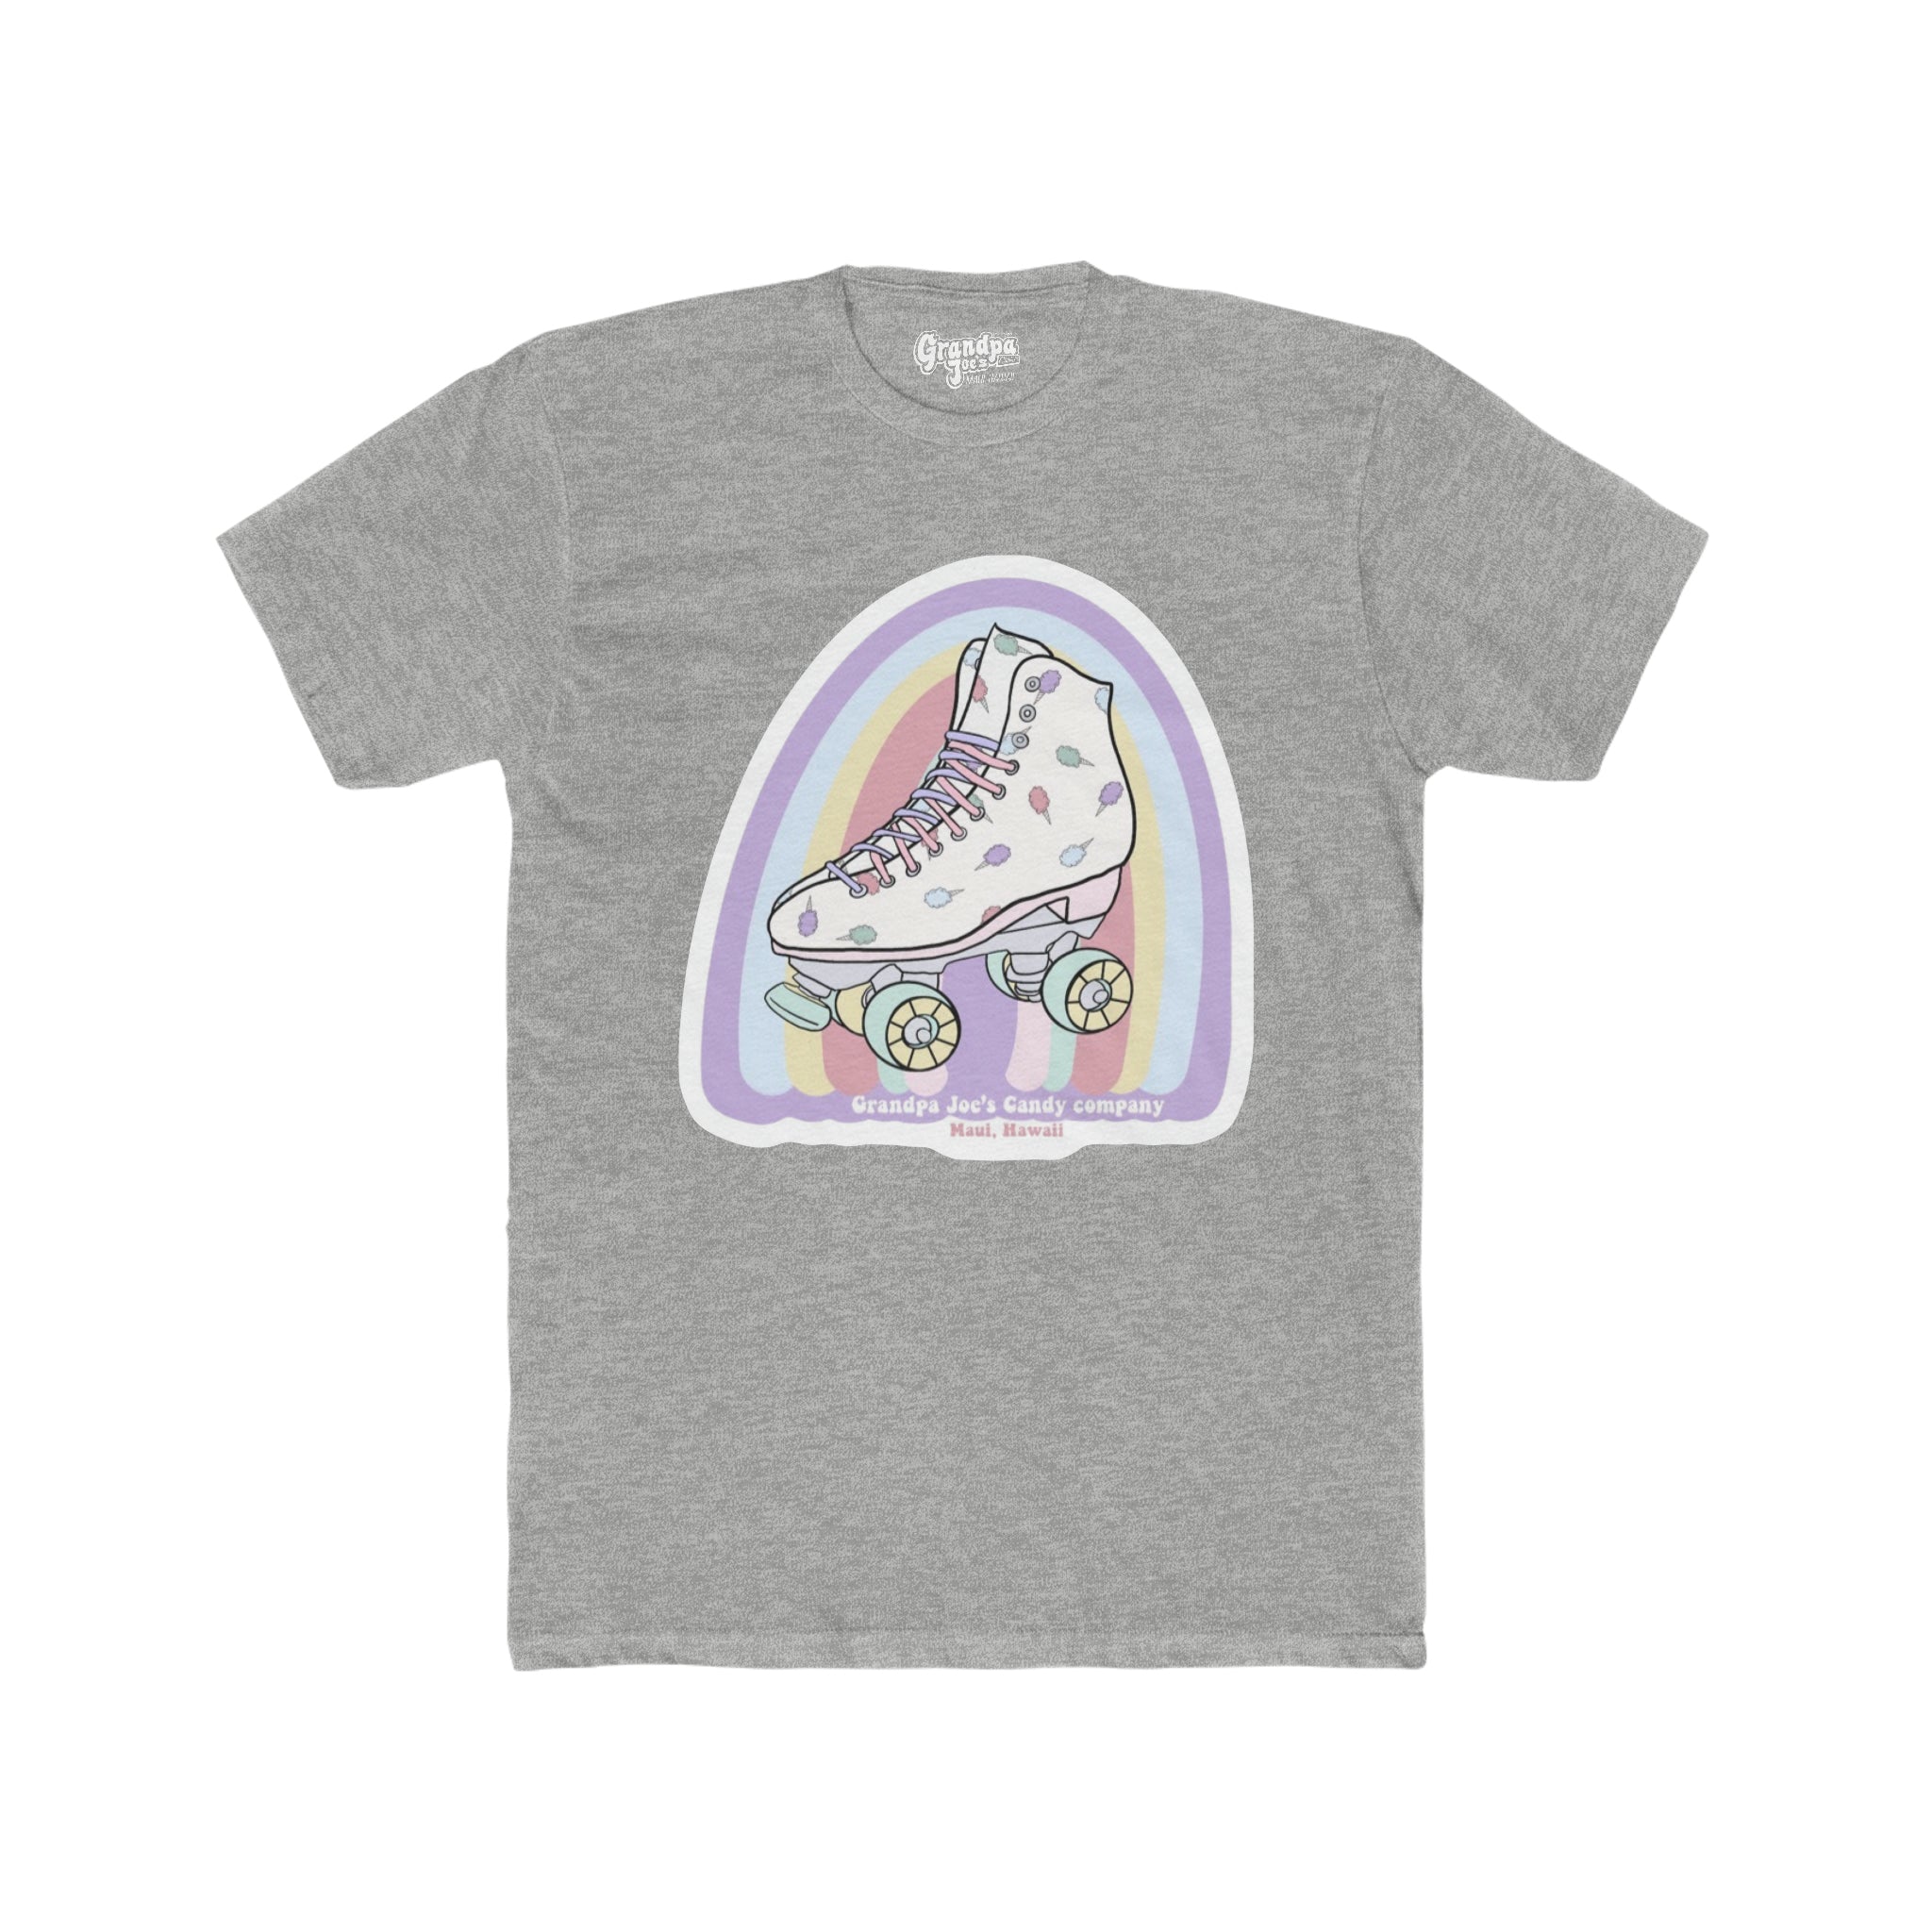 Roller Skate - Adult's T-Shirt